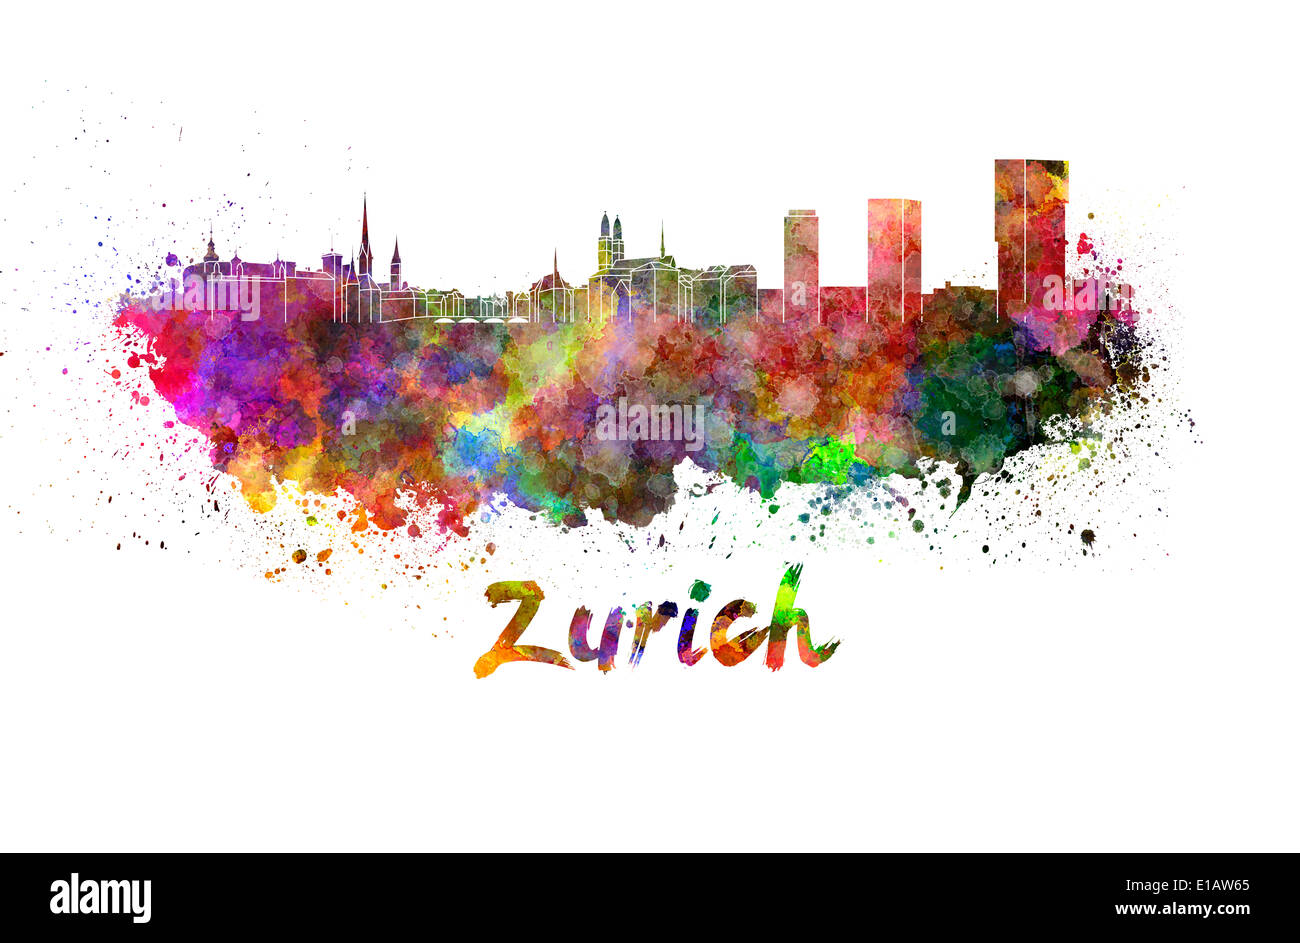 Zurich skyline in watercolor splatters Stock Photo